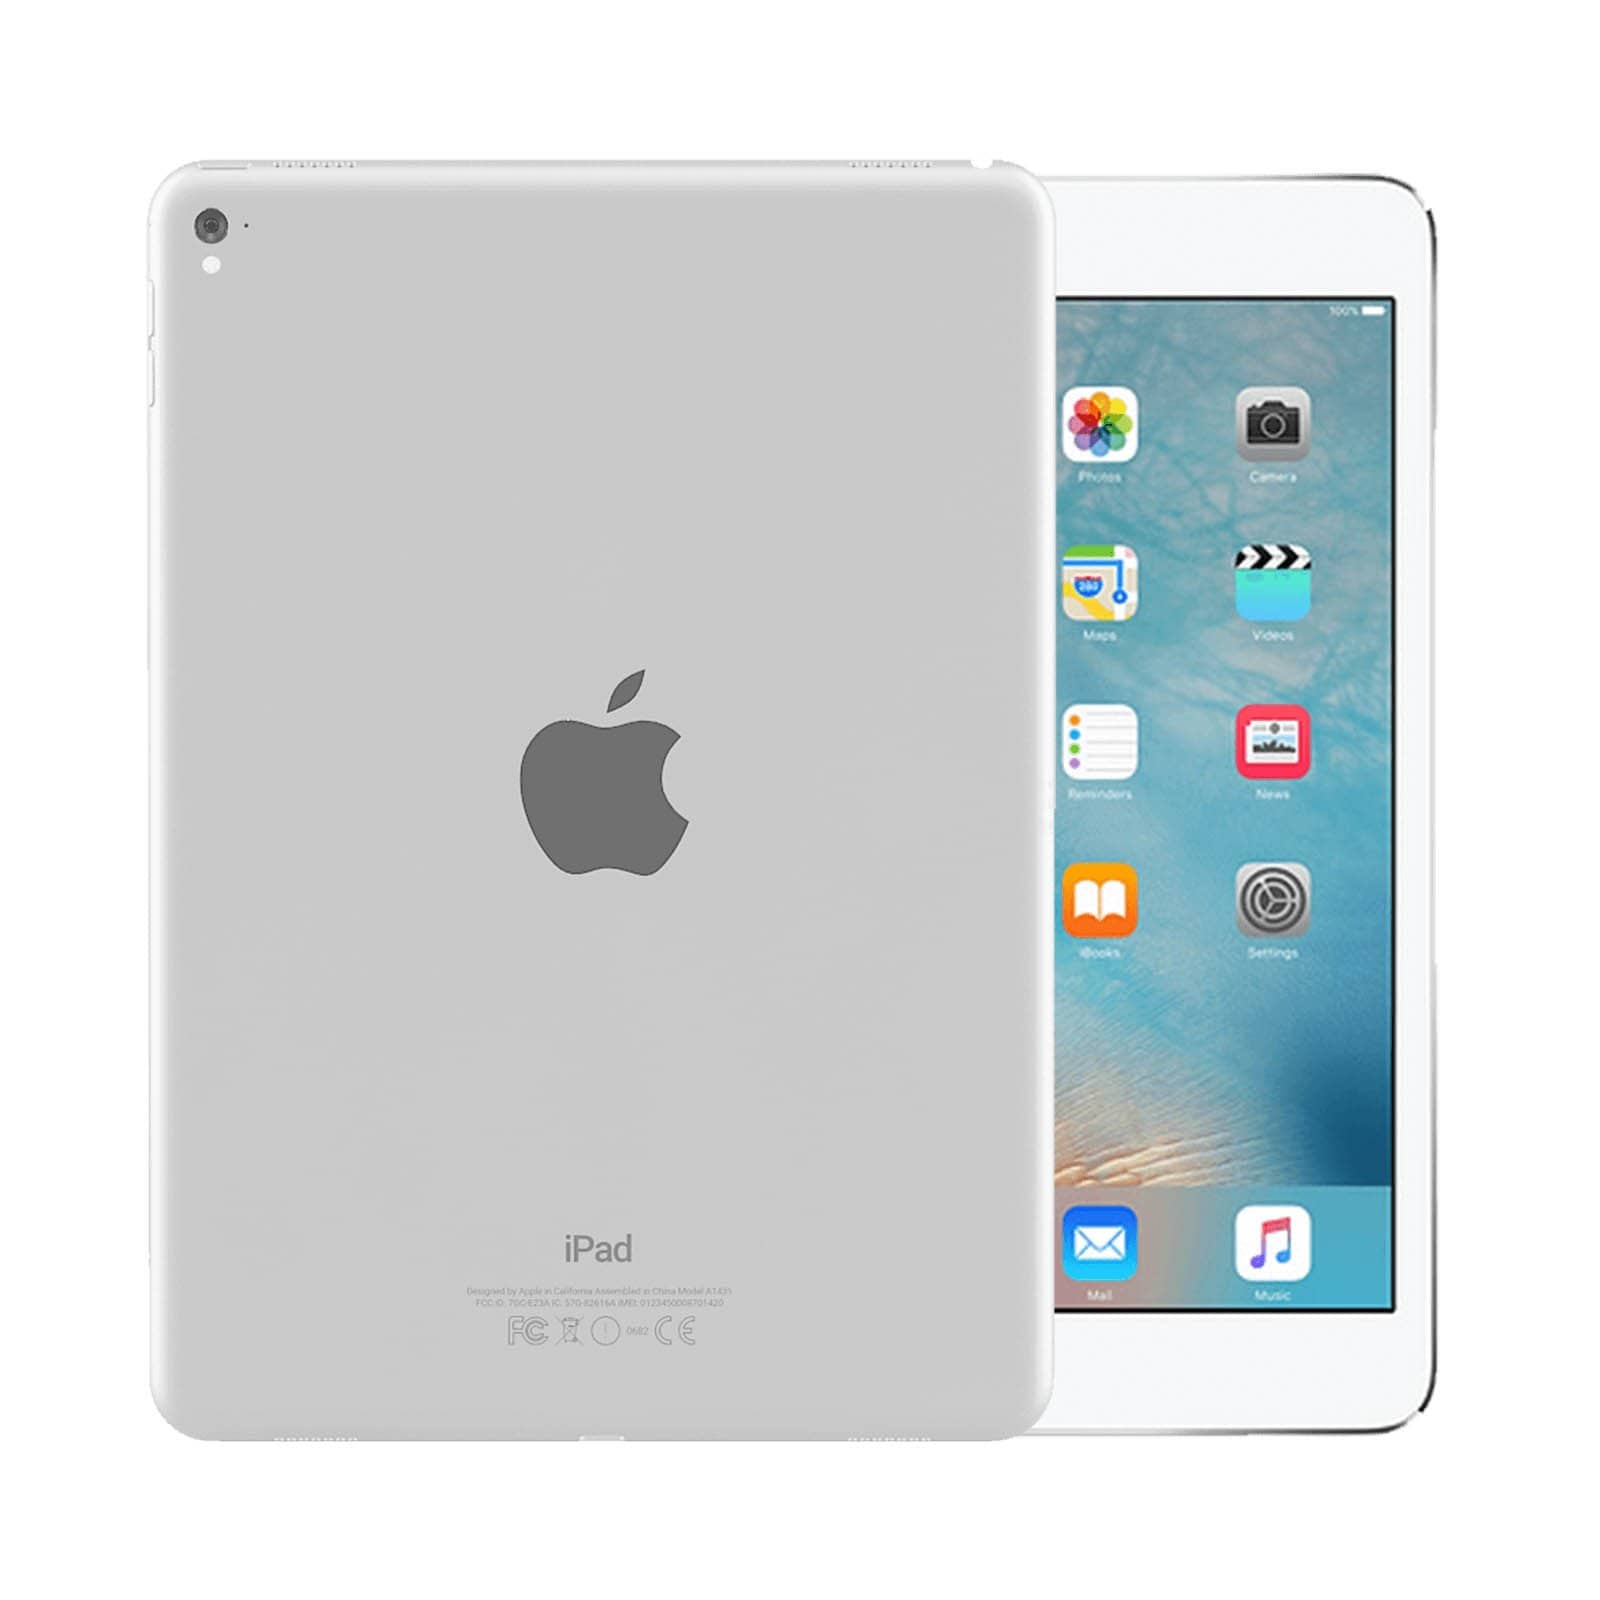 iPad Pro 9.7 Inch 256GB Silver Very Good - WiFi 256GB Silver Very Good